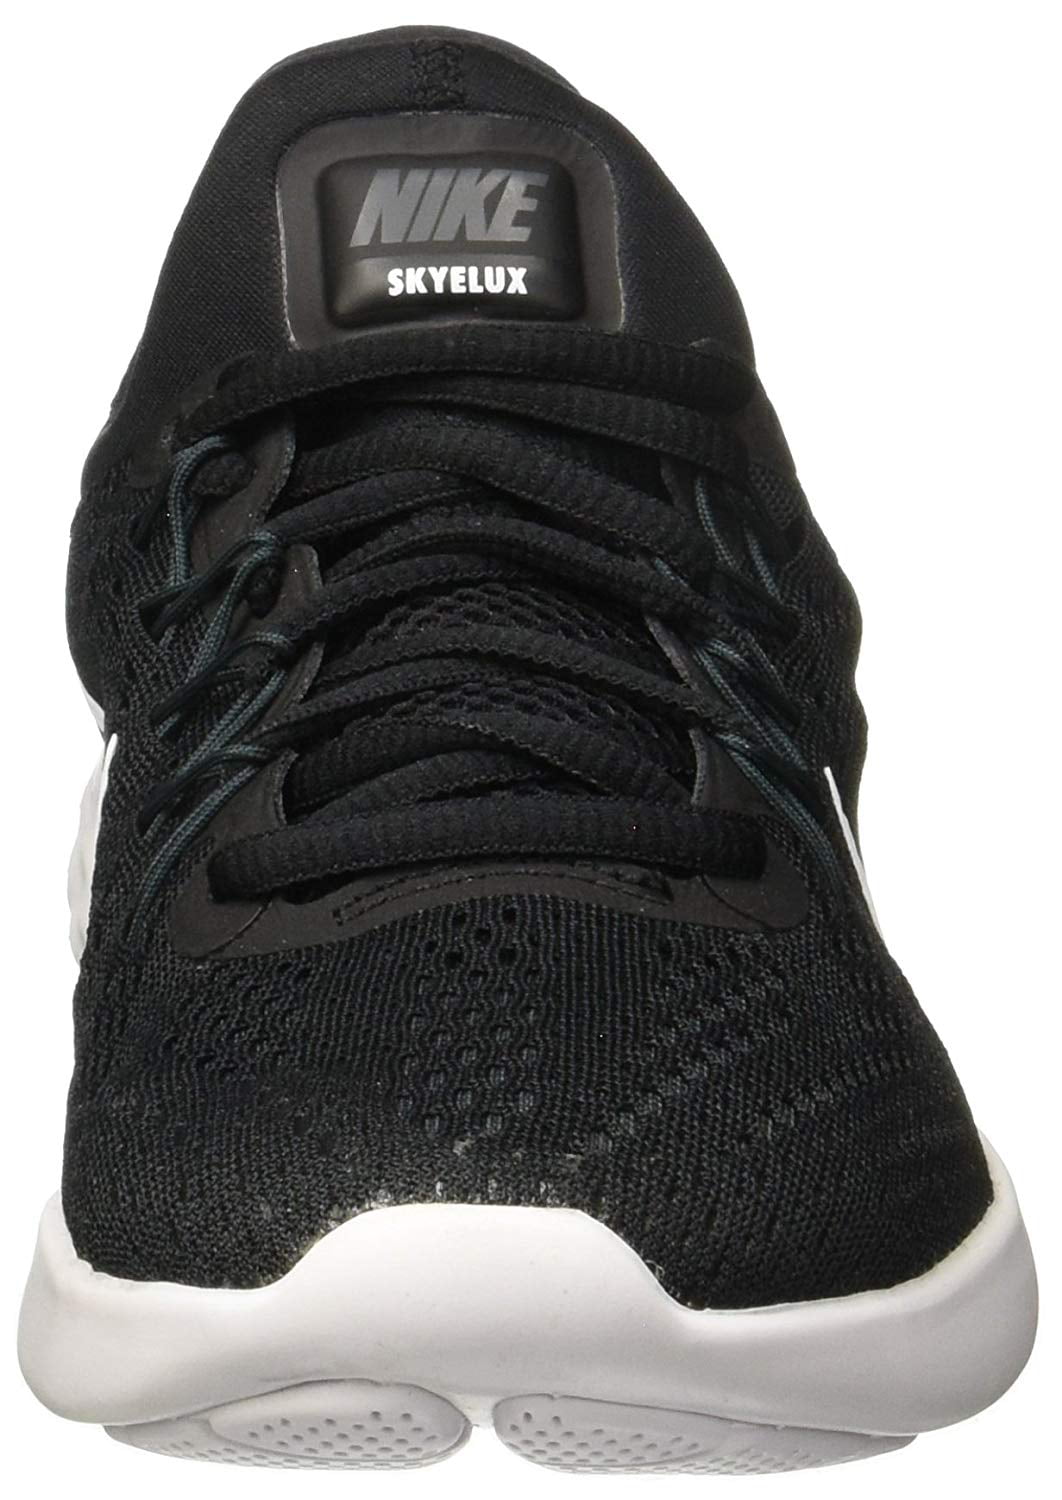 Nike Womens Lunar Skyelux Running Shoe 